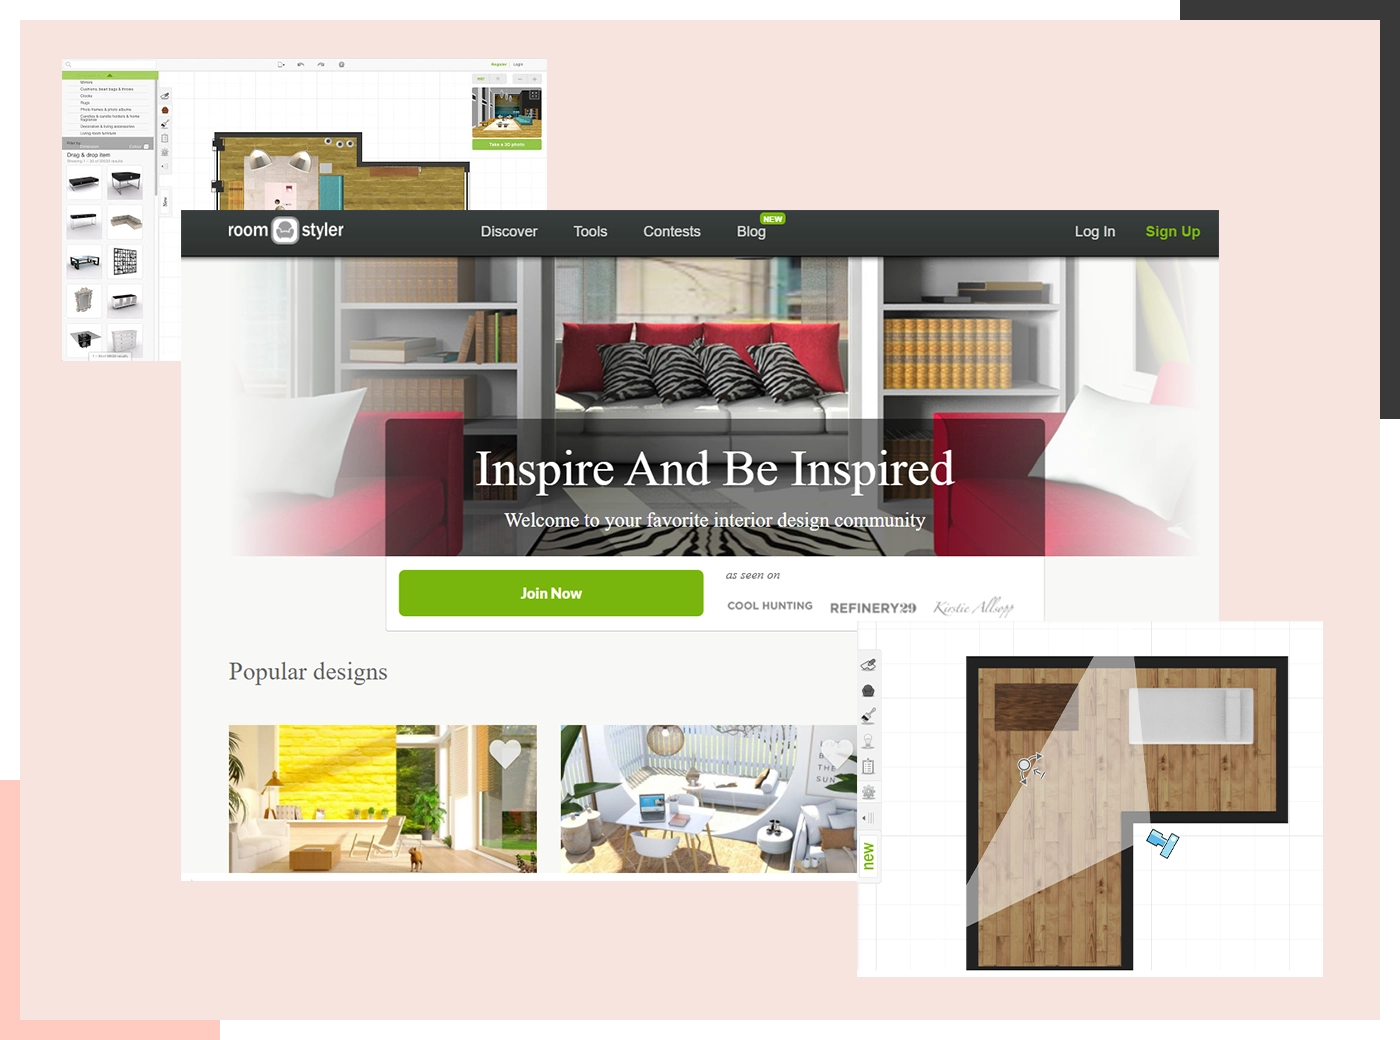 roomstyler-interior-design-software